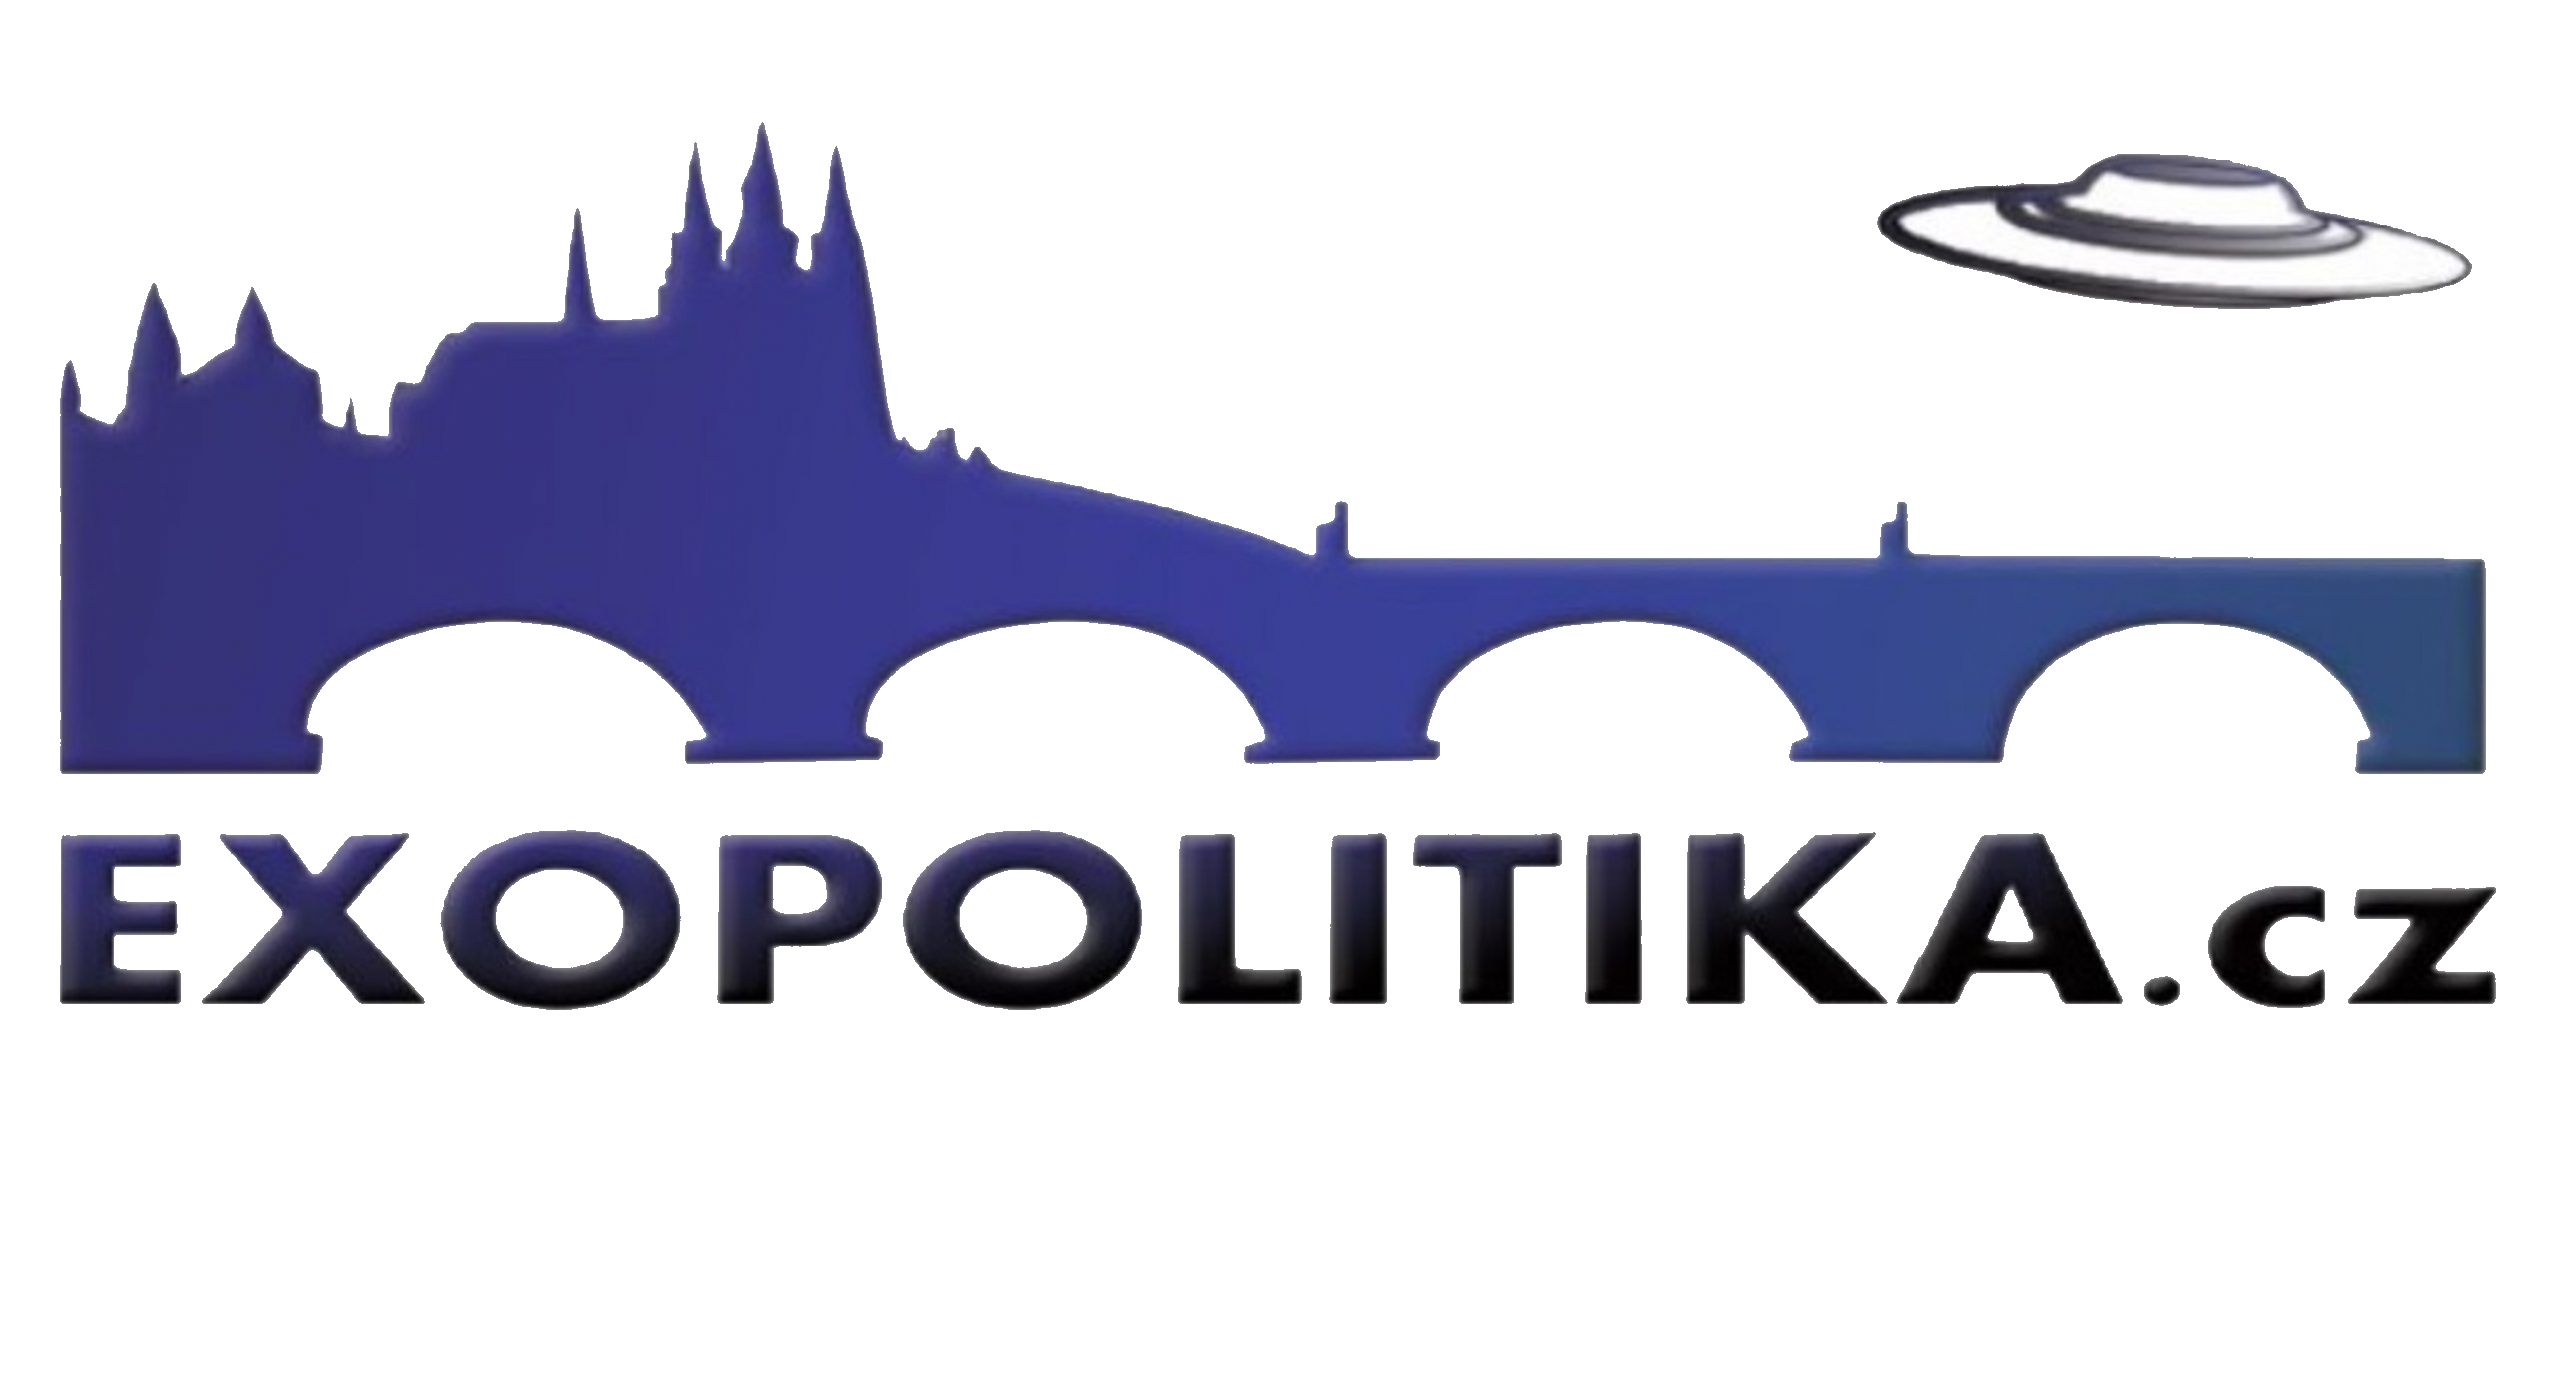 Exopolitika.cz